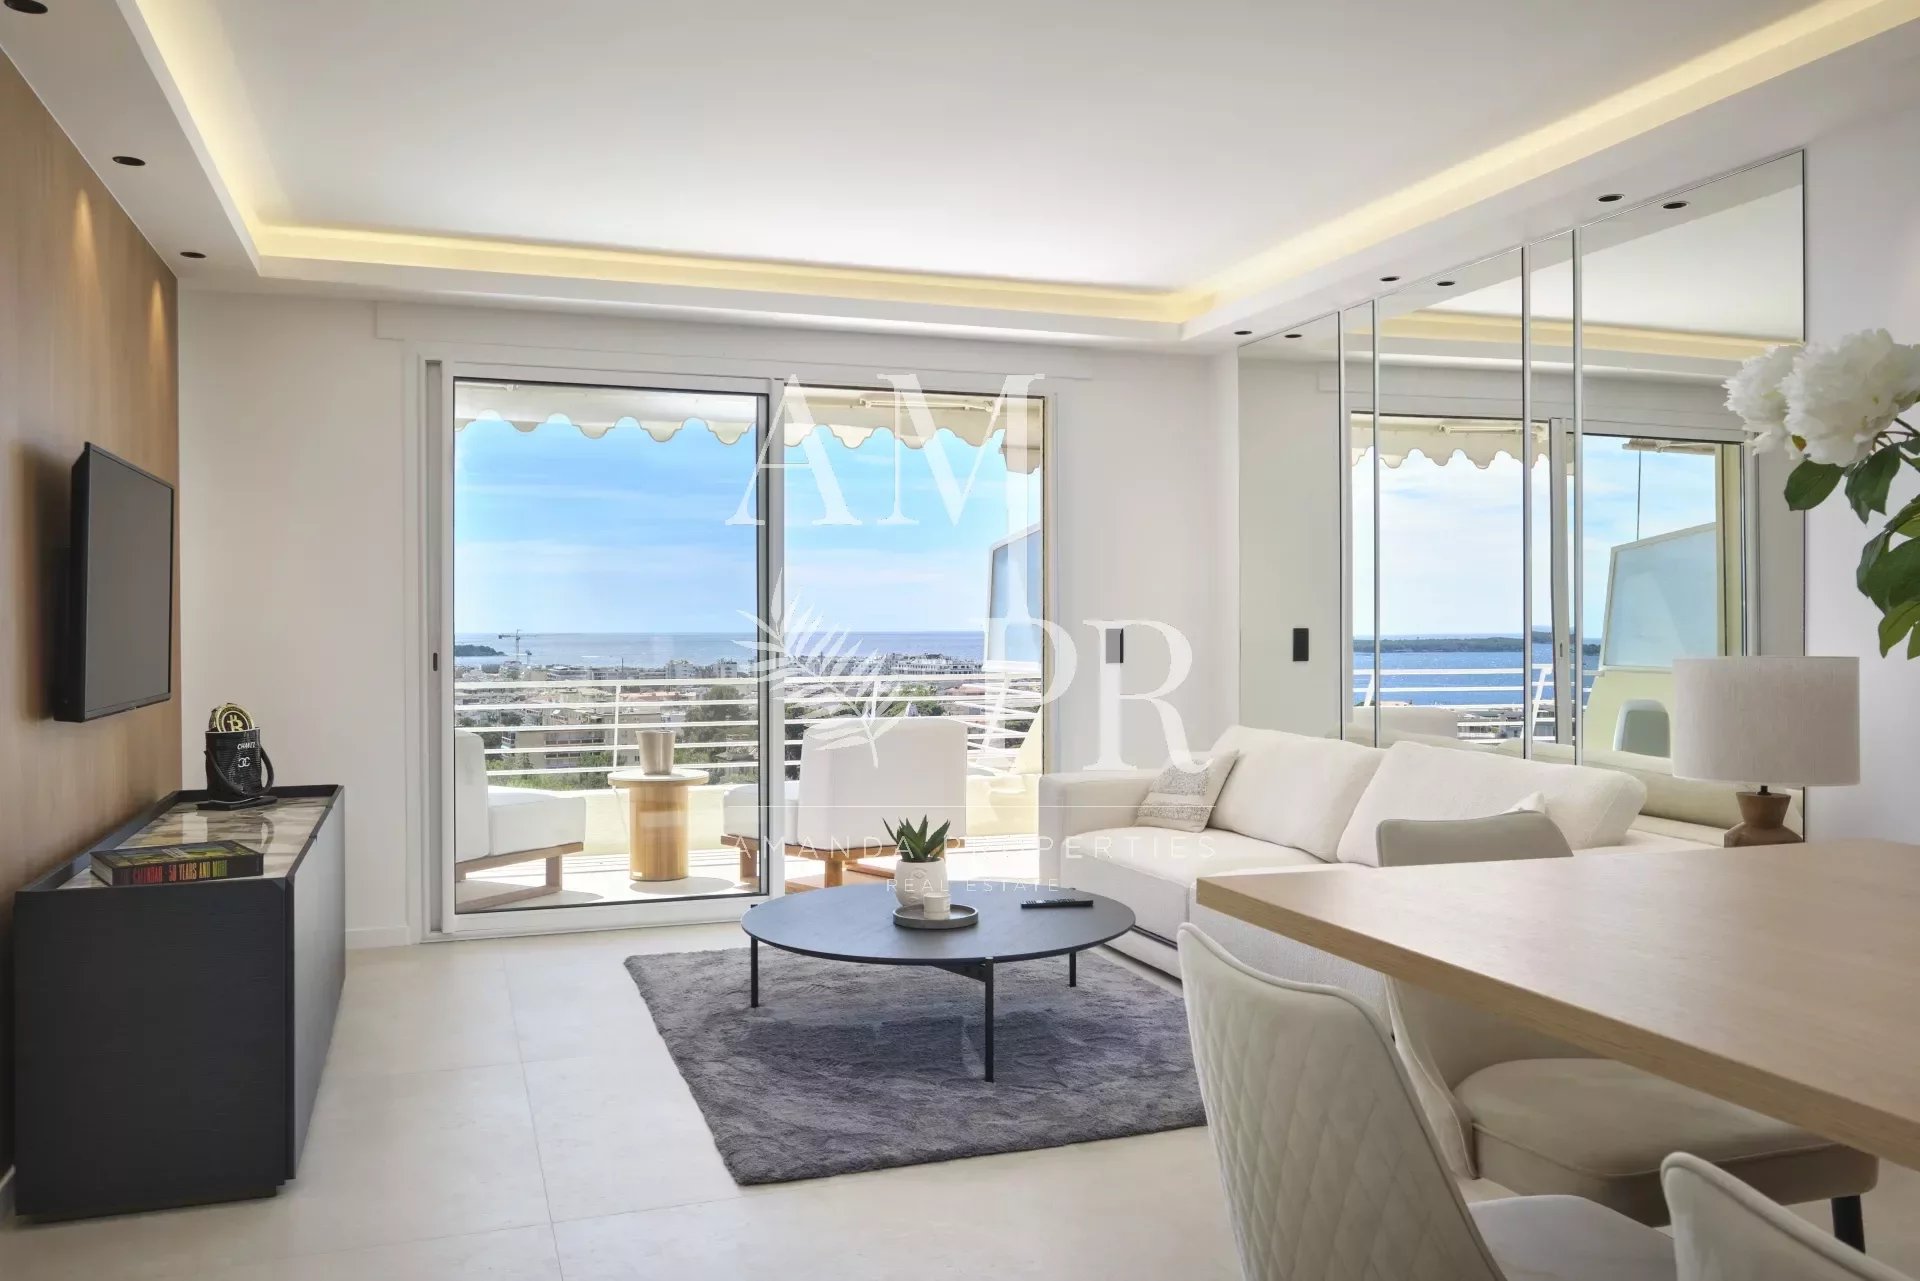 Cannes Basse Californie - 3 room flat of 70sqm - Panoramic sea view